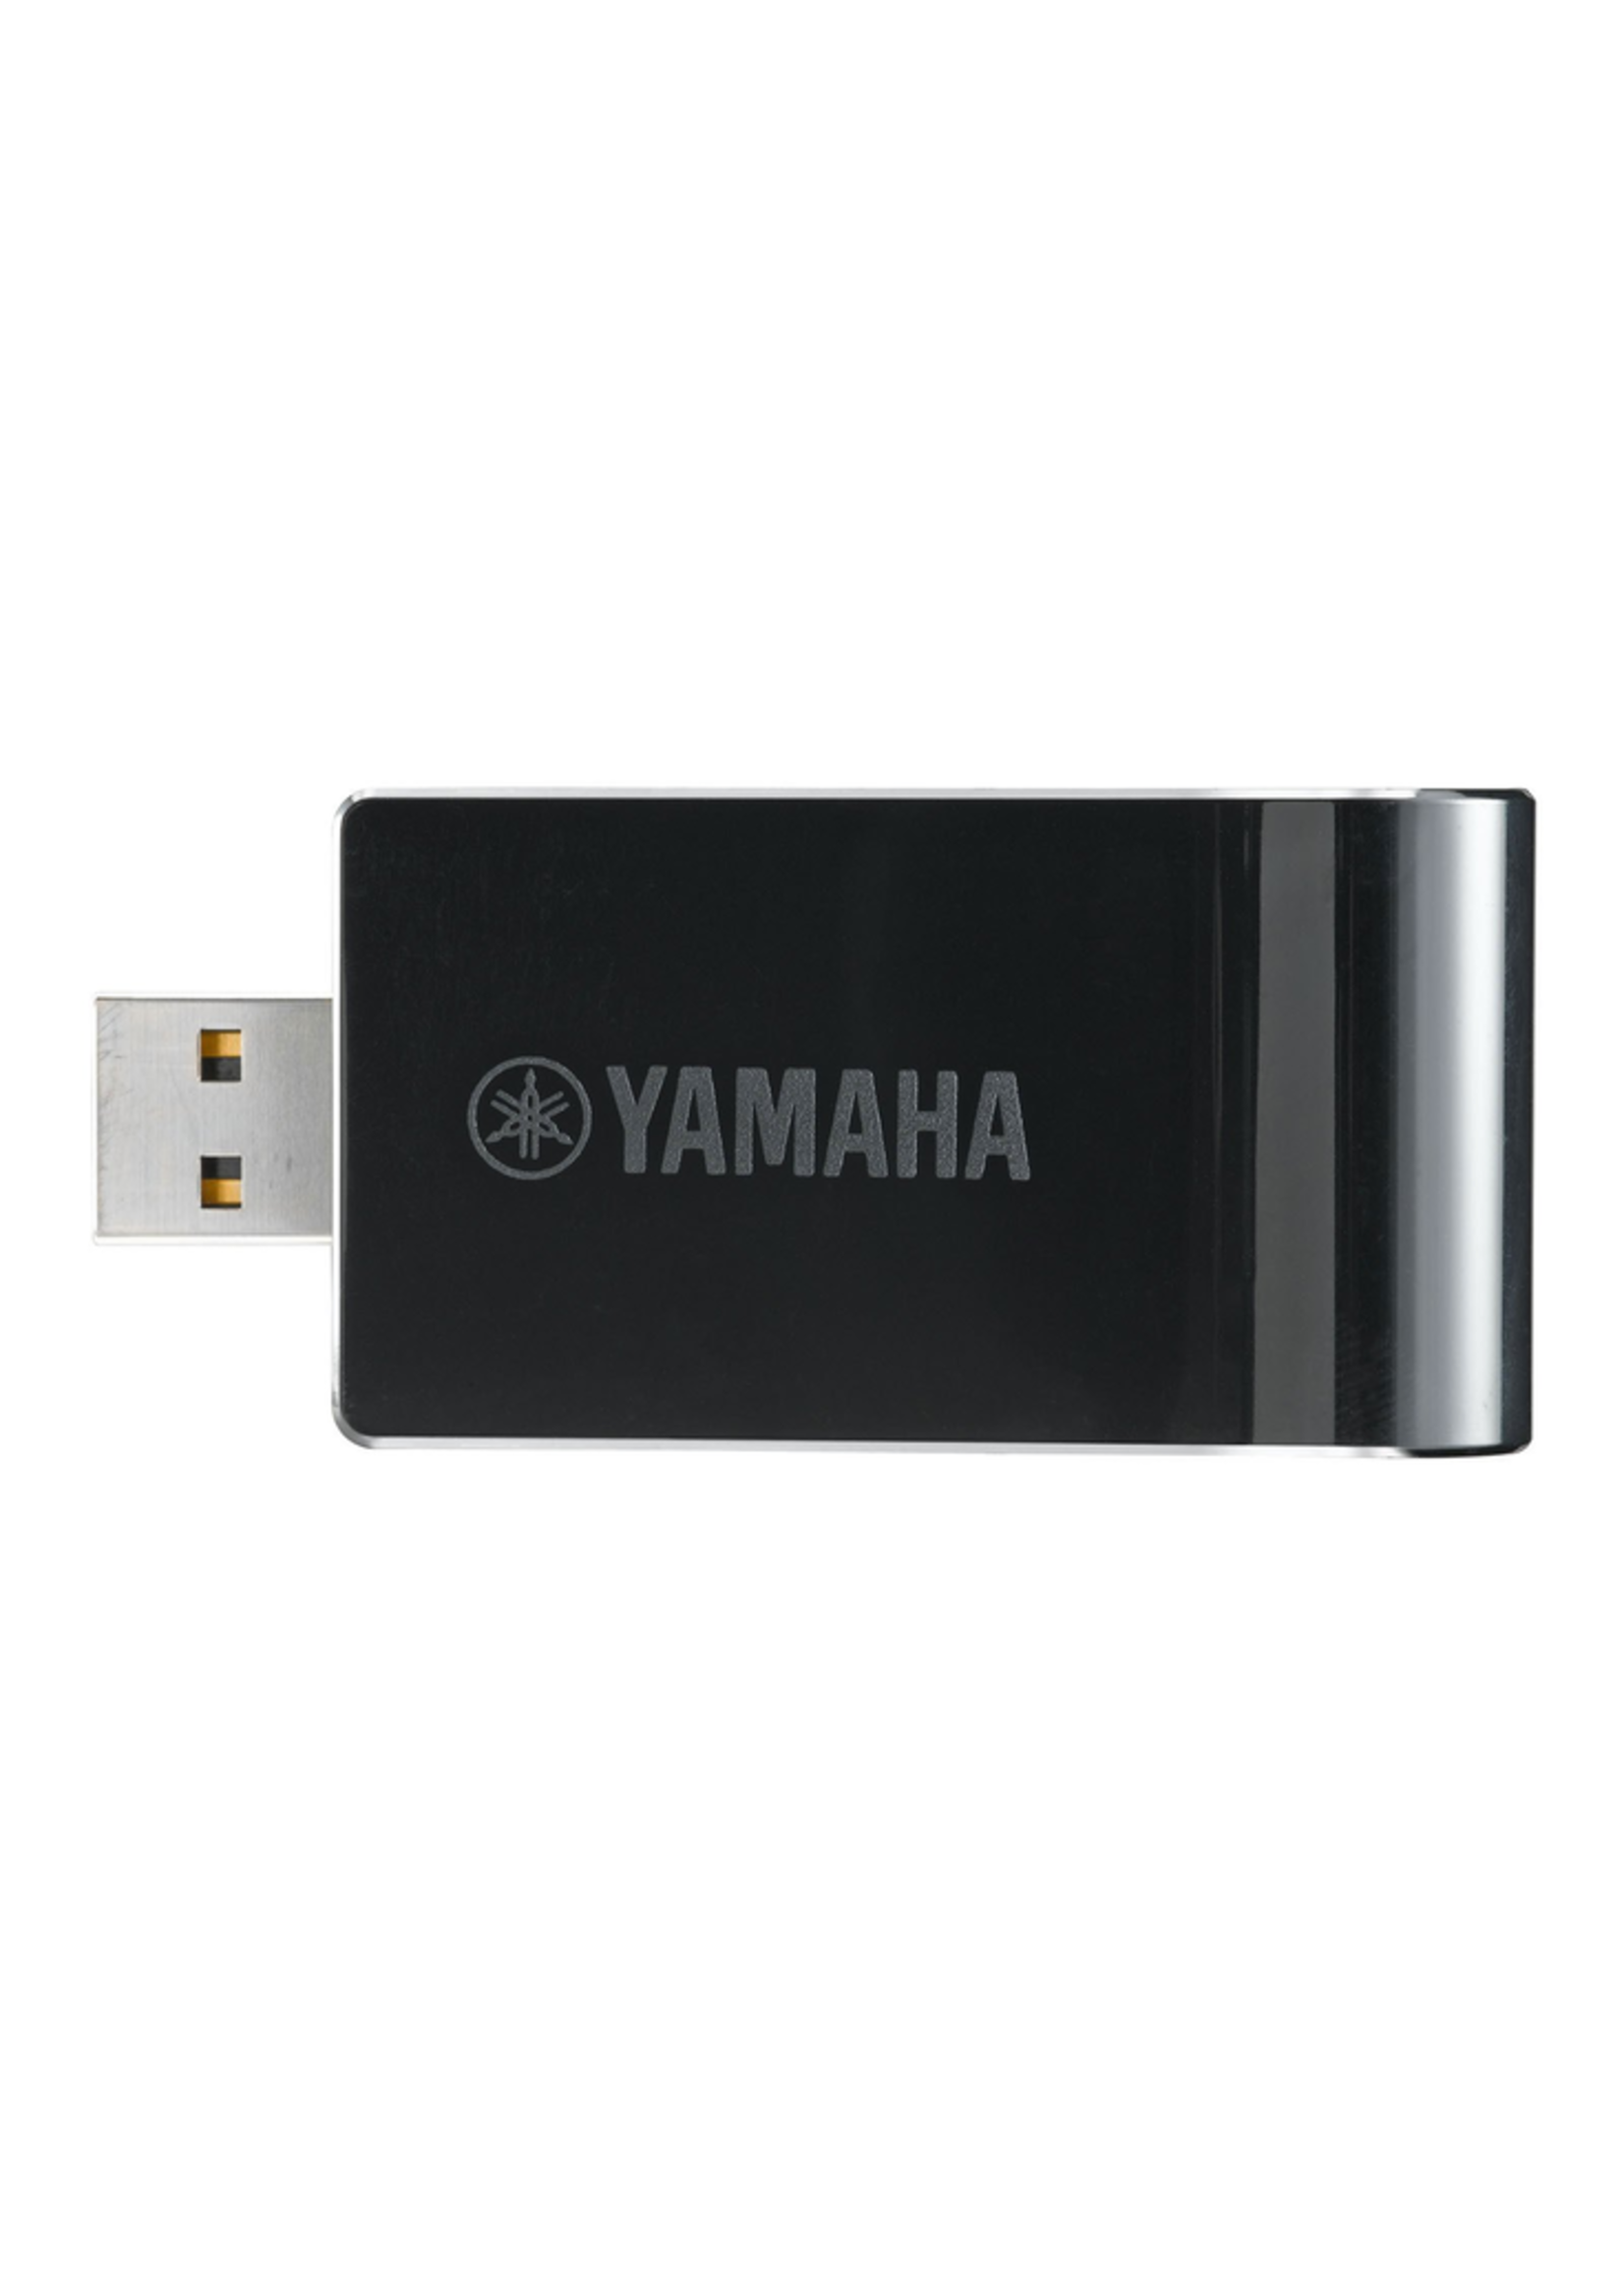 Yamaha Yamaha Wireless USB LAN Adaptor UDWL01